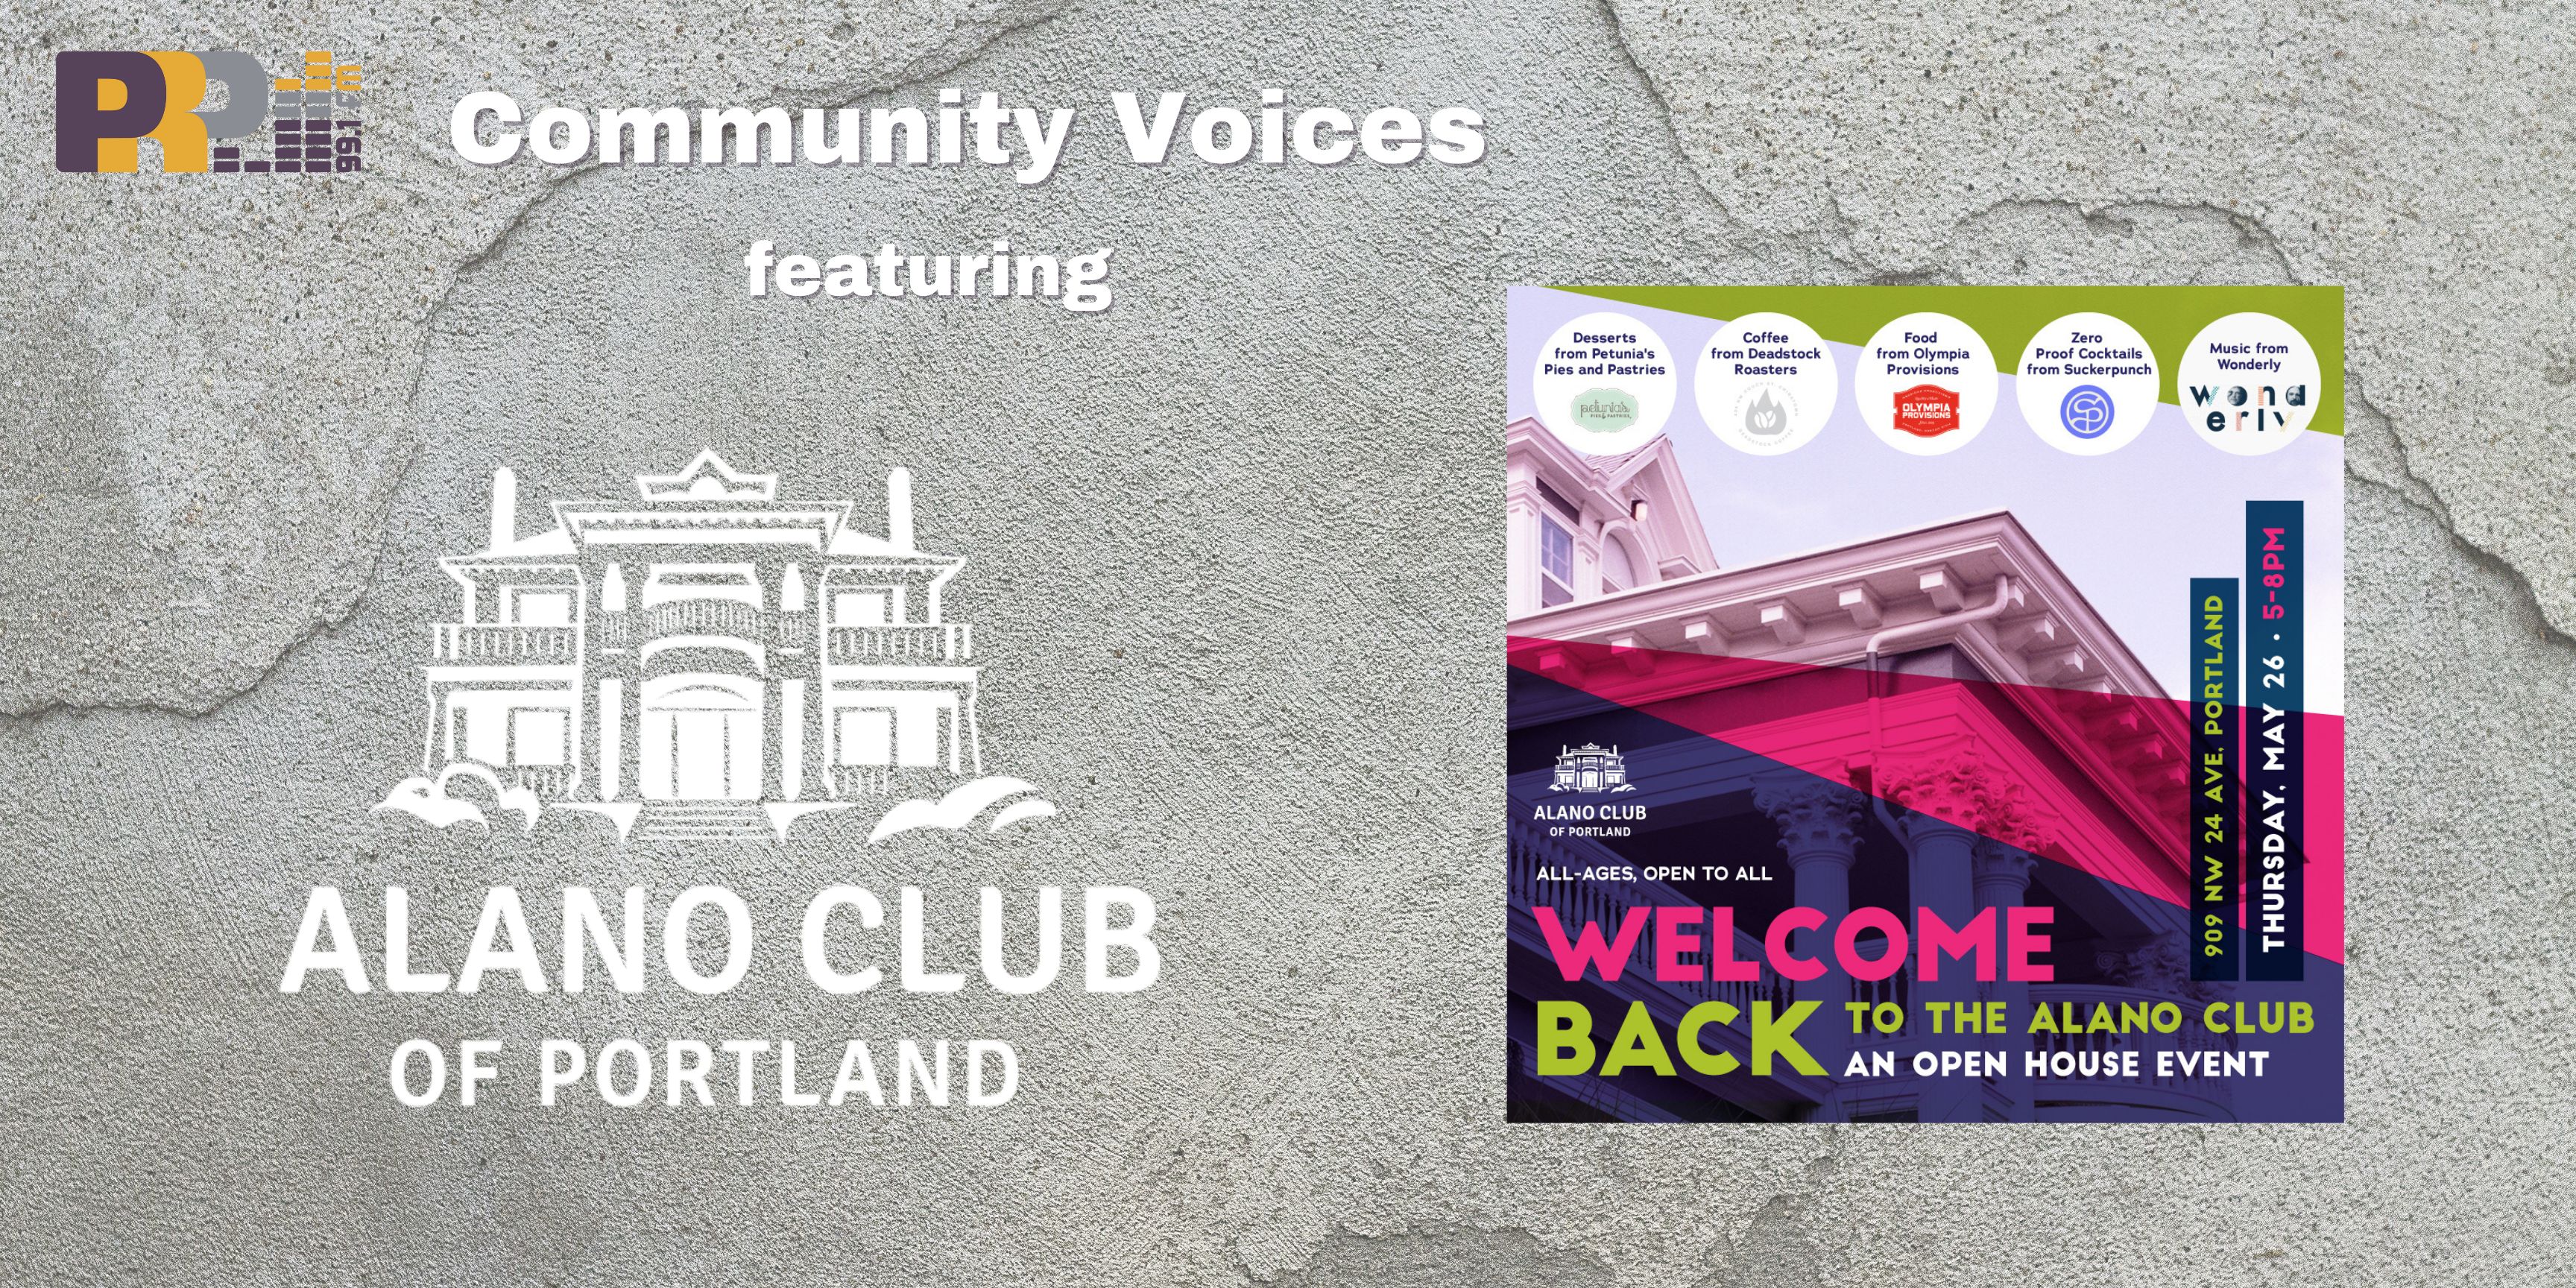 Community Voices: The Alano Club of Portland